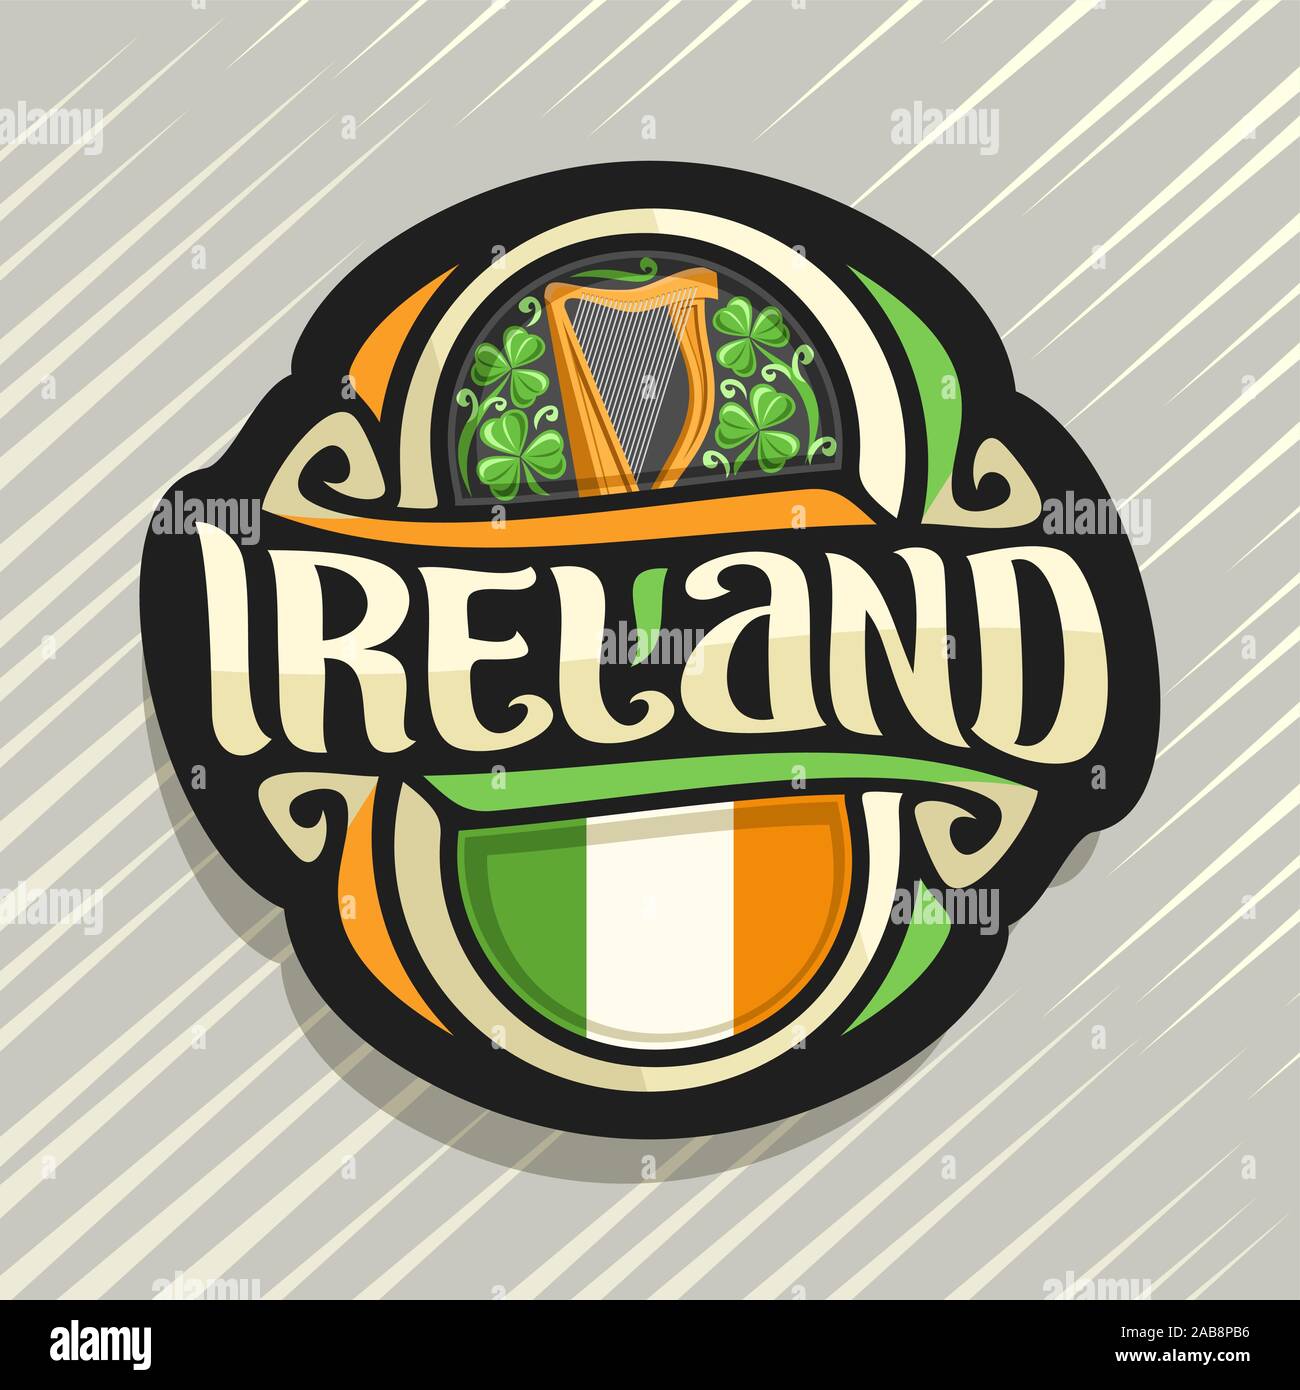 Vector logo for Ireland country, fridge magnet with irish flag, original brush typeface for word ireland and irish national symbols - music instrument Stock Vector